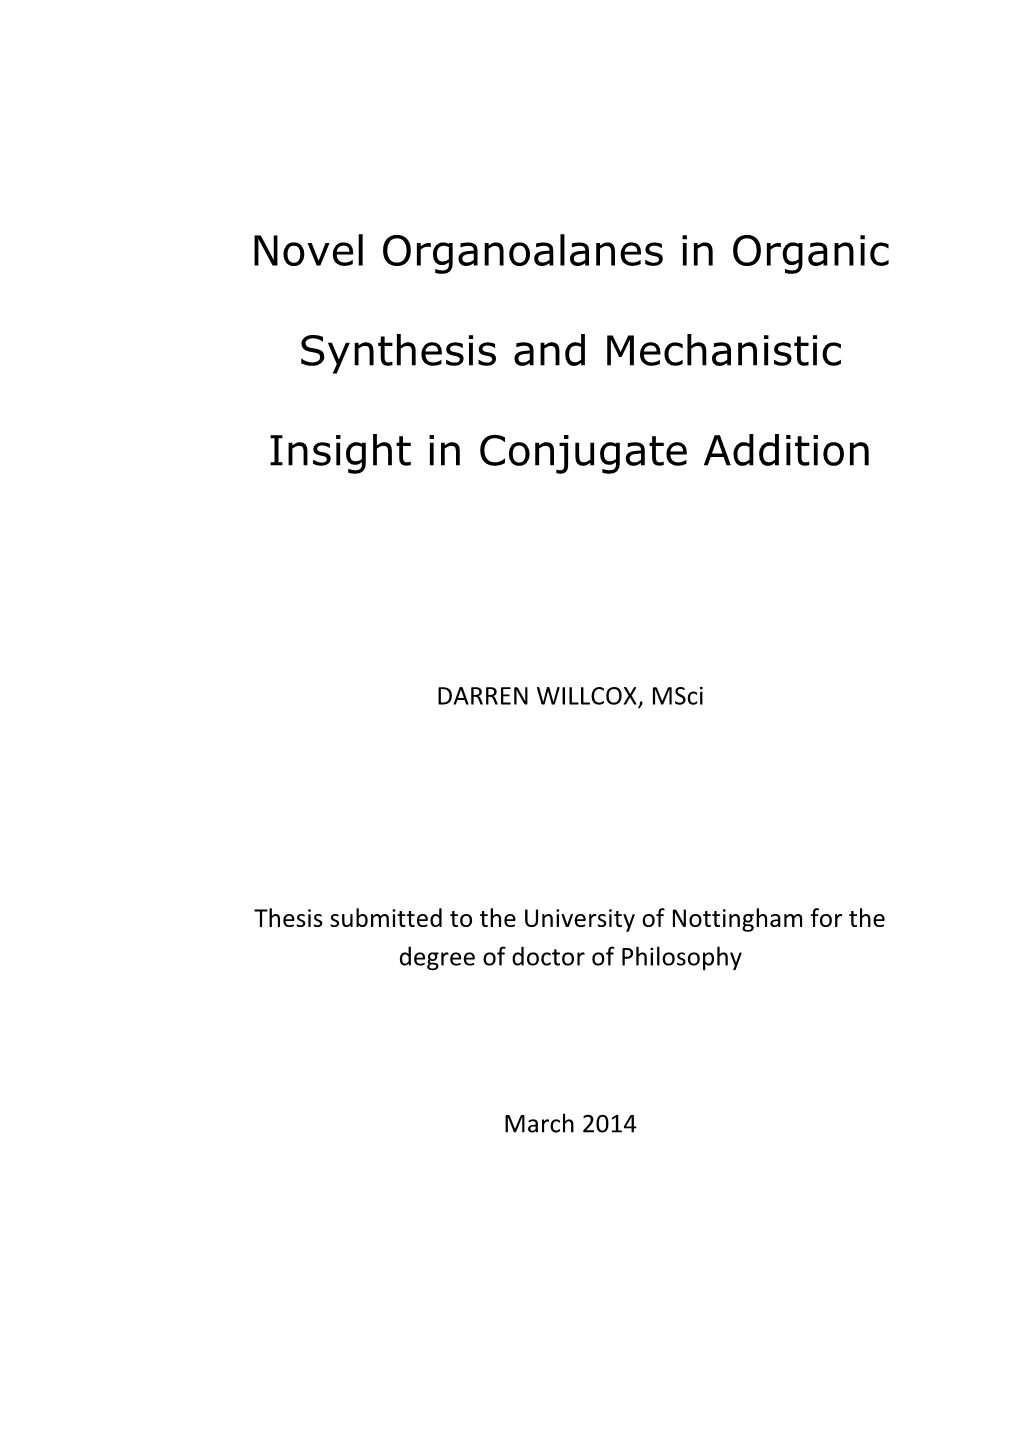 Willcox, Darren (2014) Novel Organoalanes in Organic Synthesis